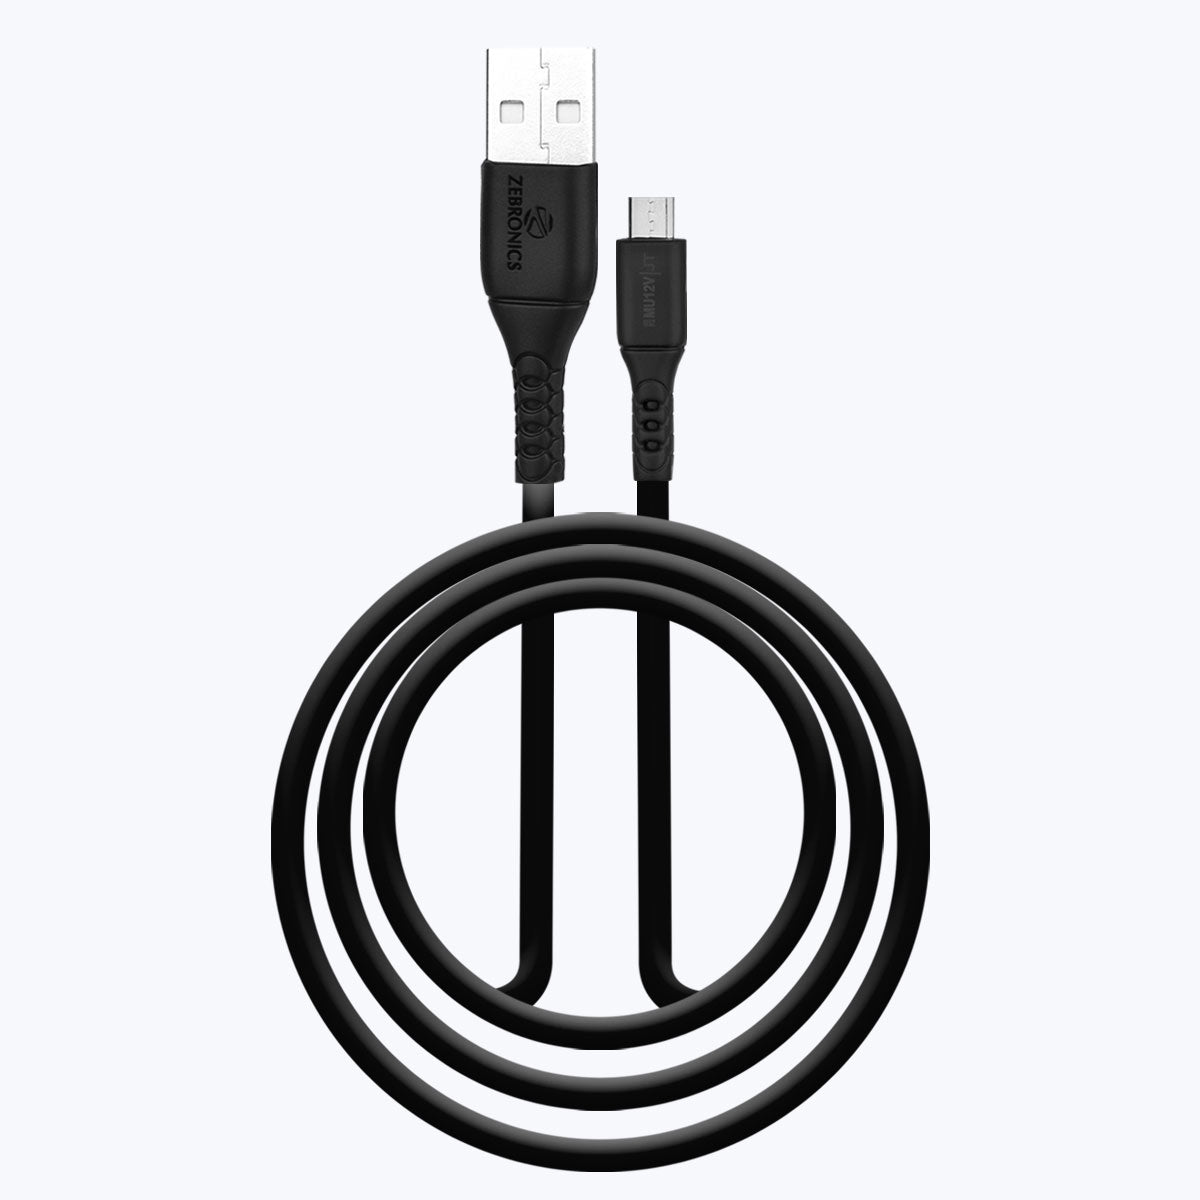 ZEB-MU12V - Micro USB Cable - Zebronics